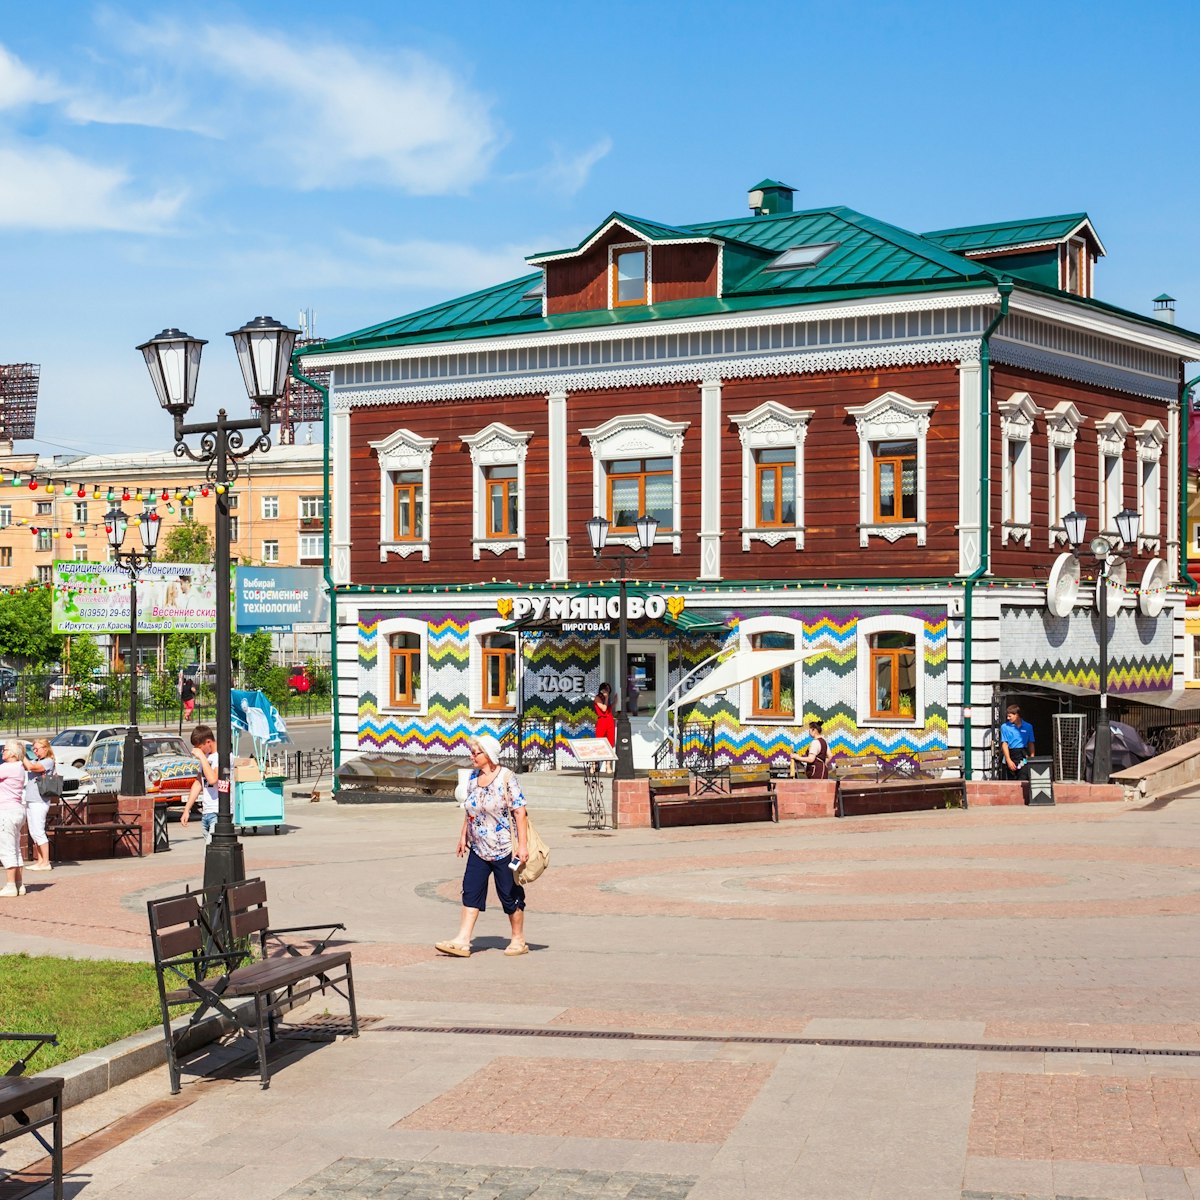 130 Kvartal quarter, a neighbourhood of the historic buildings in the center of Irkutsk city in Russia.